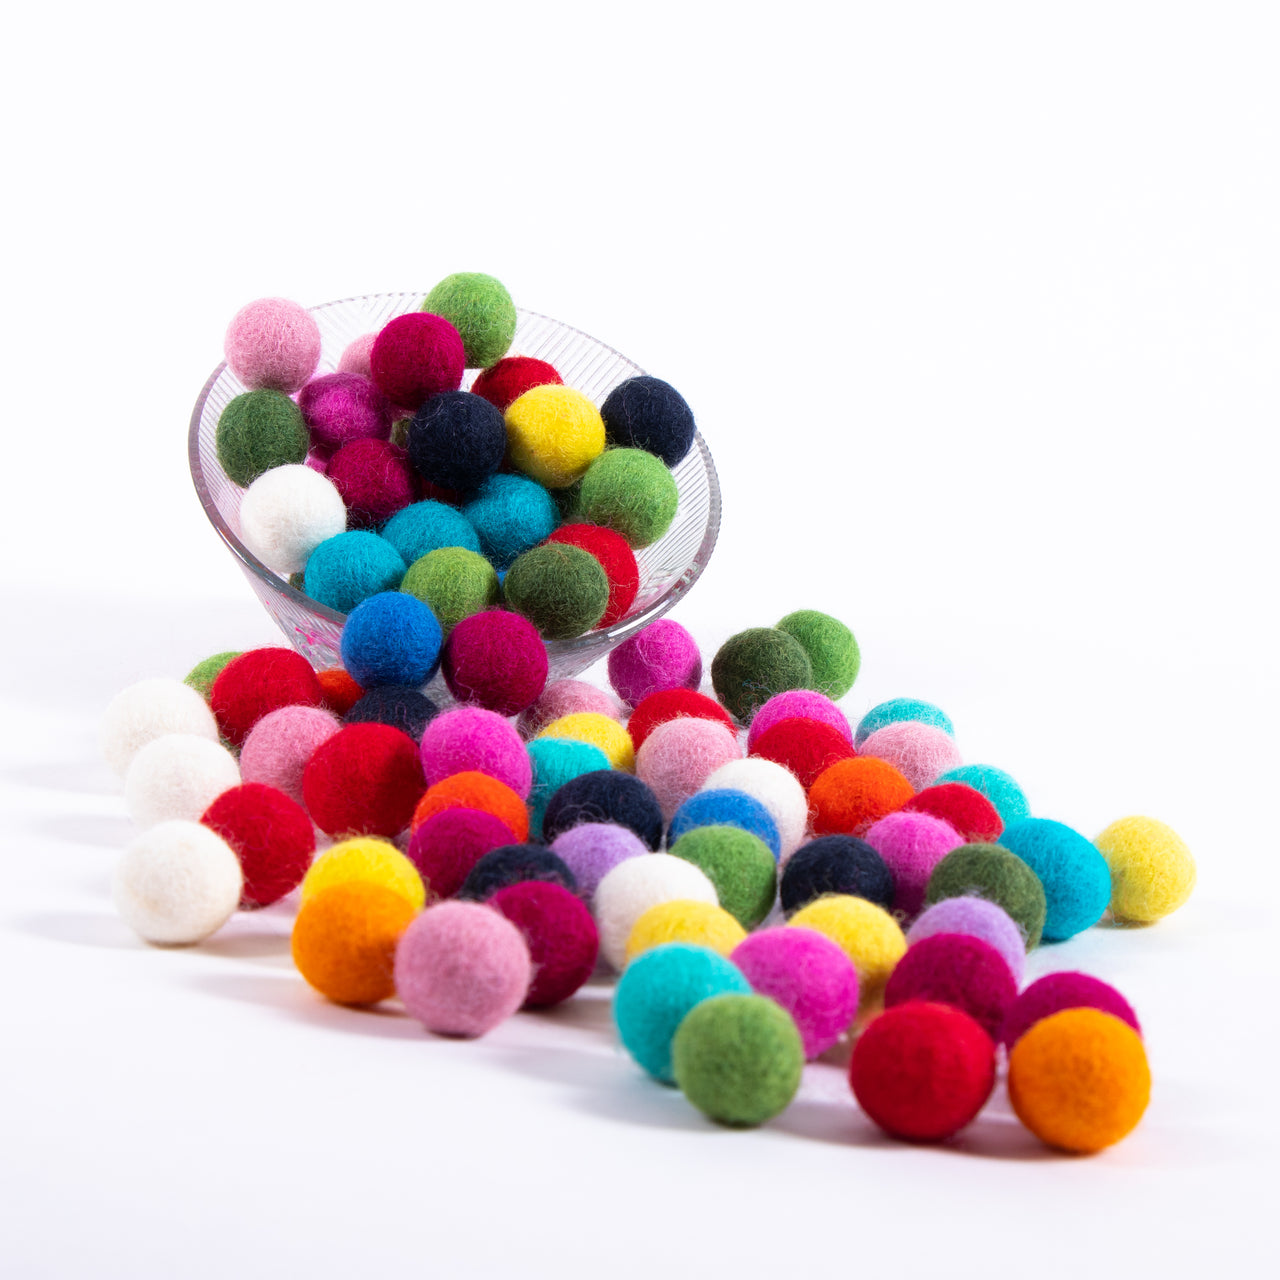 Organic Wool Felt Ball Kit | Art and Crafts